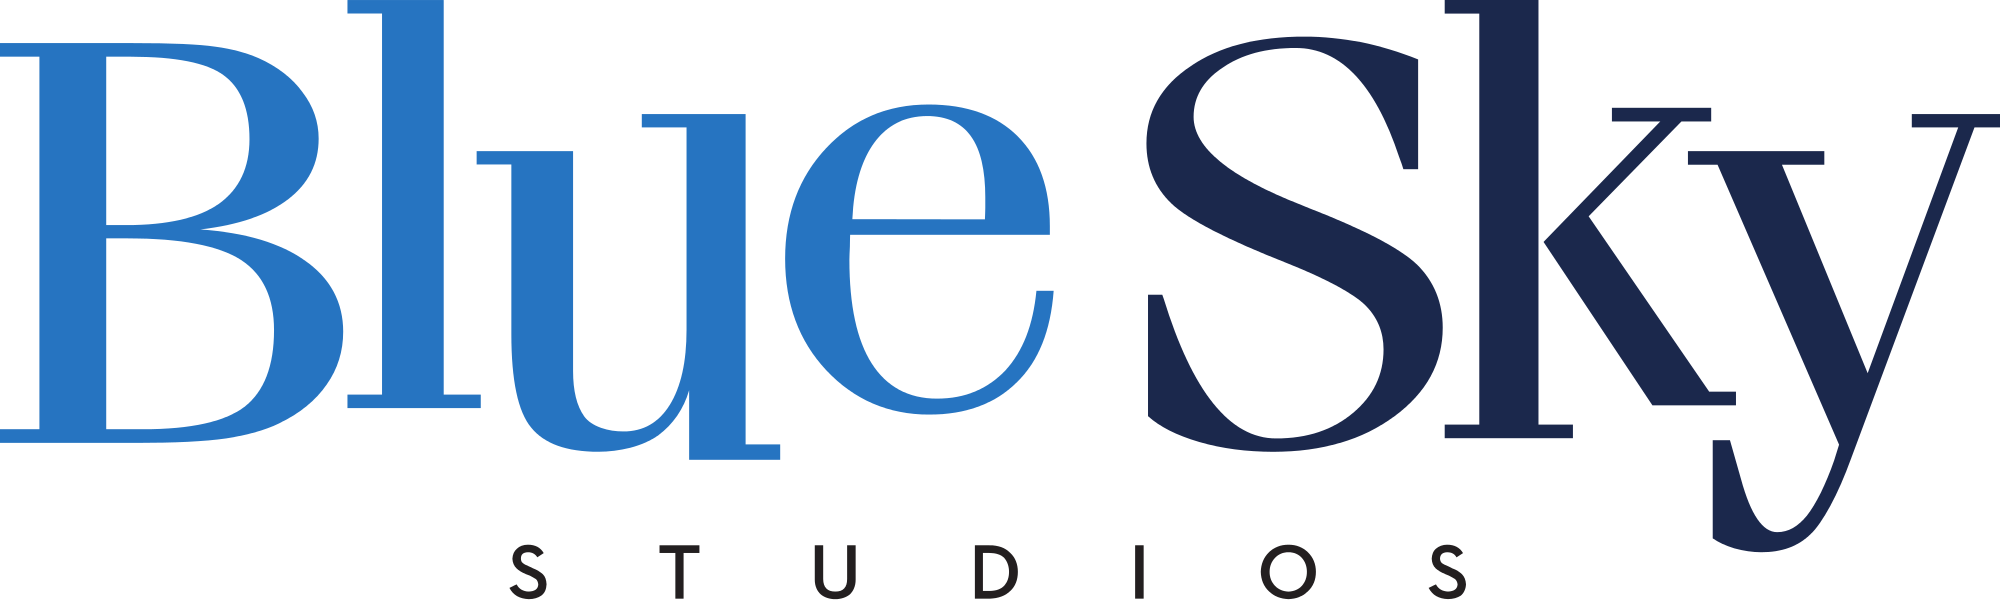 Blue_Sky_Studios_2013_logo.svg.png